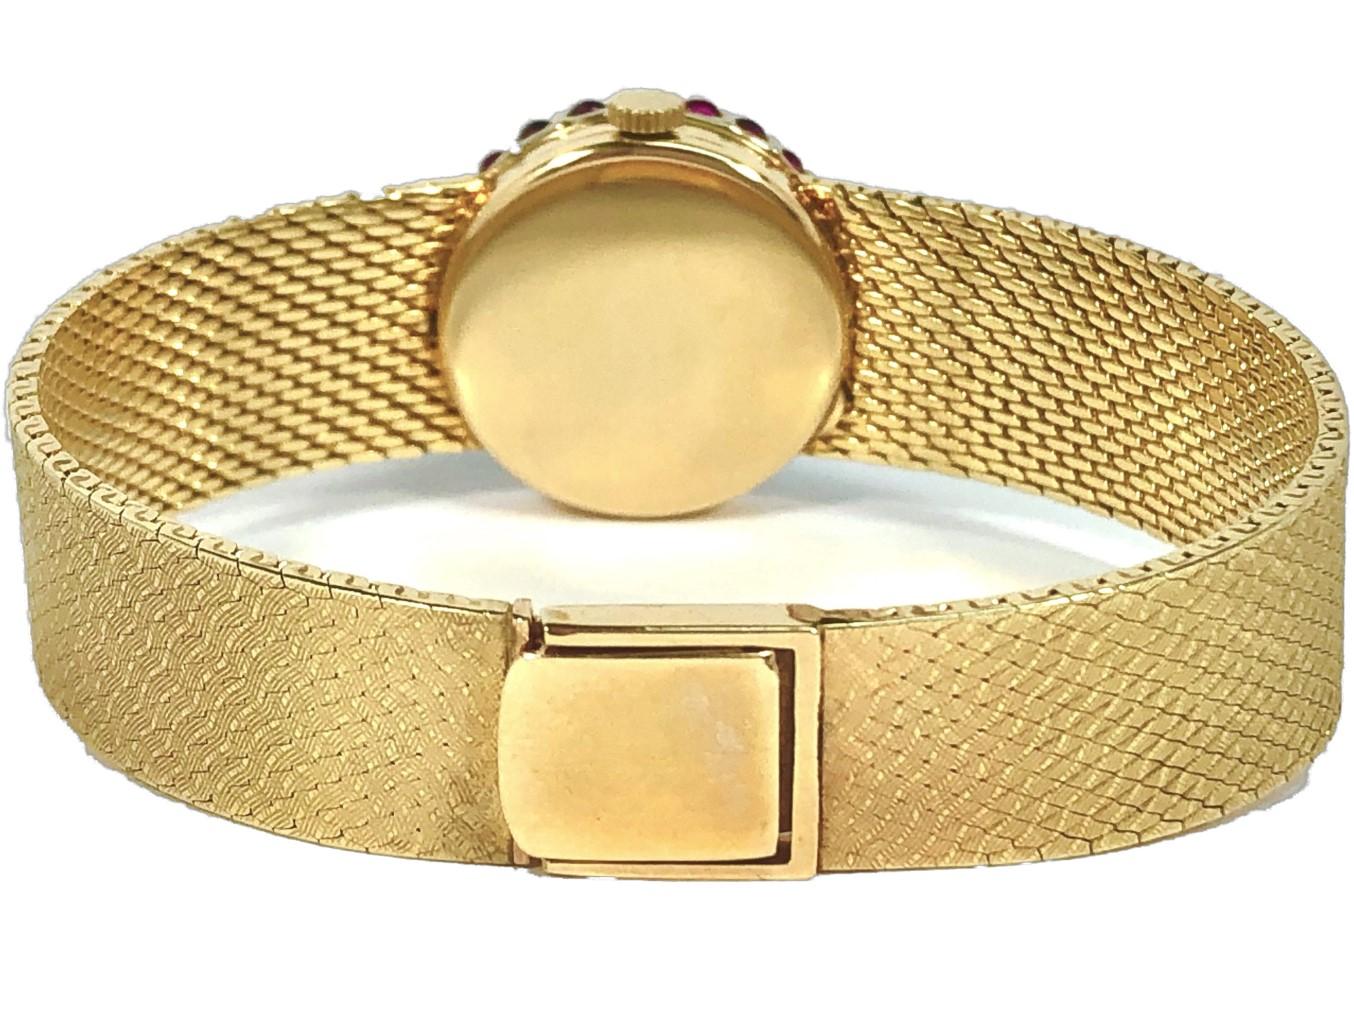 Tiffany & Co. Gold Double Bezel Watch with One Diamond Bezel and One Ruby Bezel 2